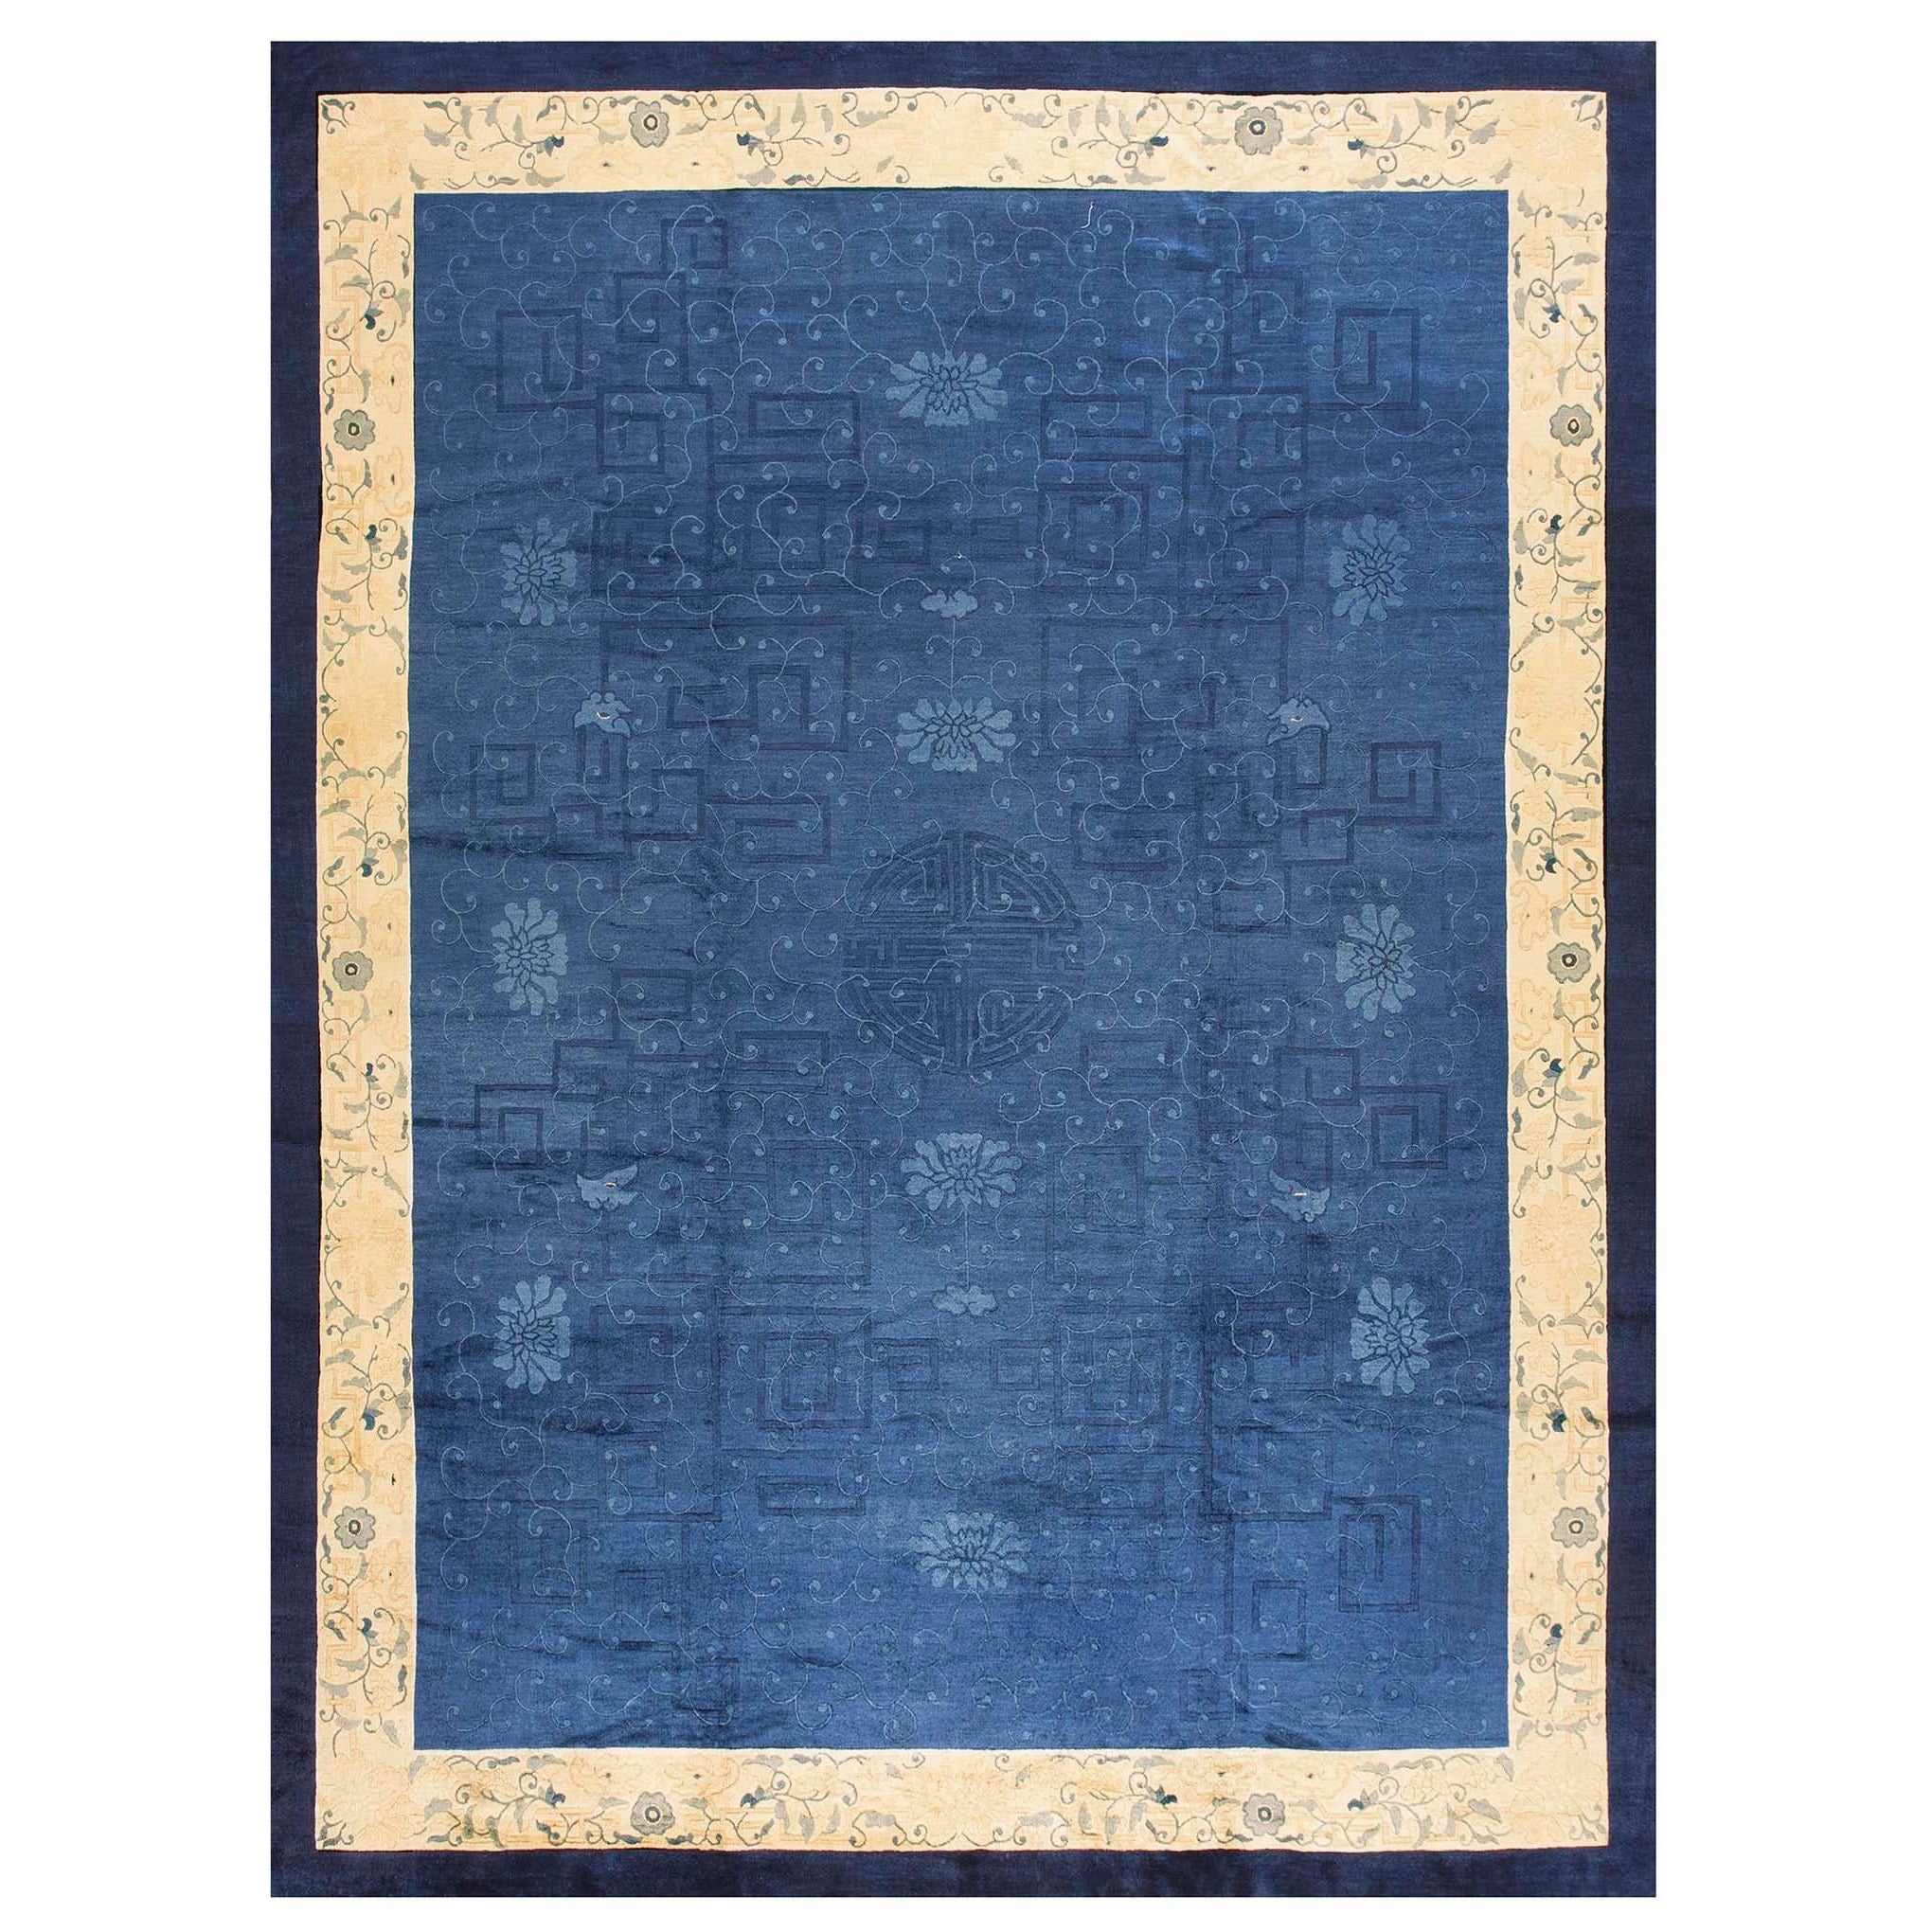 Late 19th Century Chinese Peking Carpet ( 9' x 11'8" - 275 x 355 cm ) 